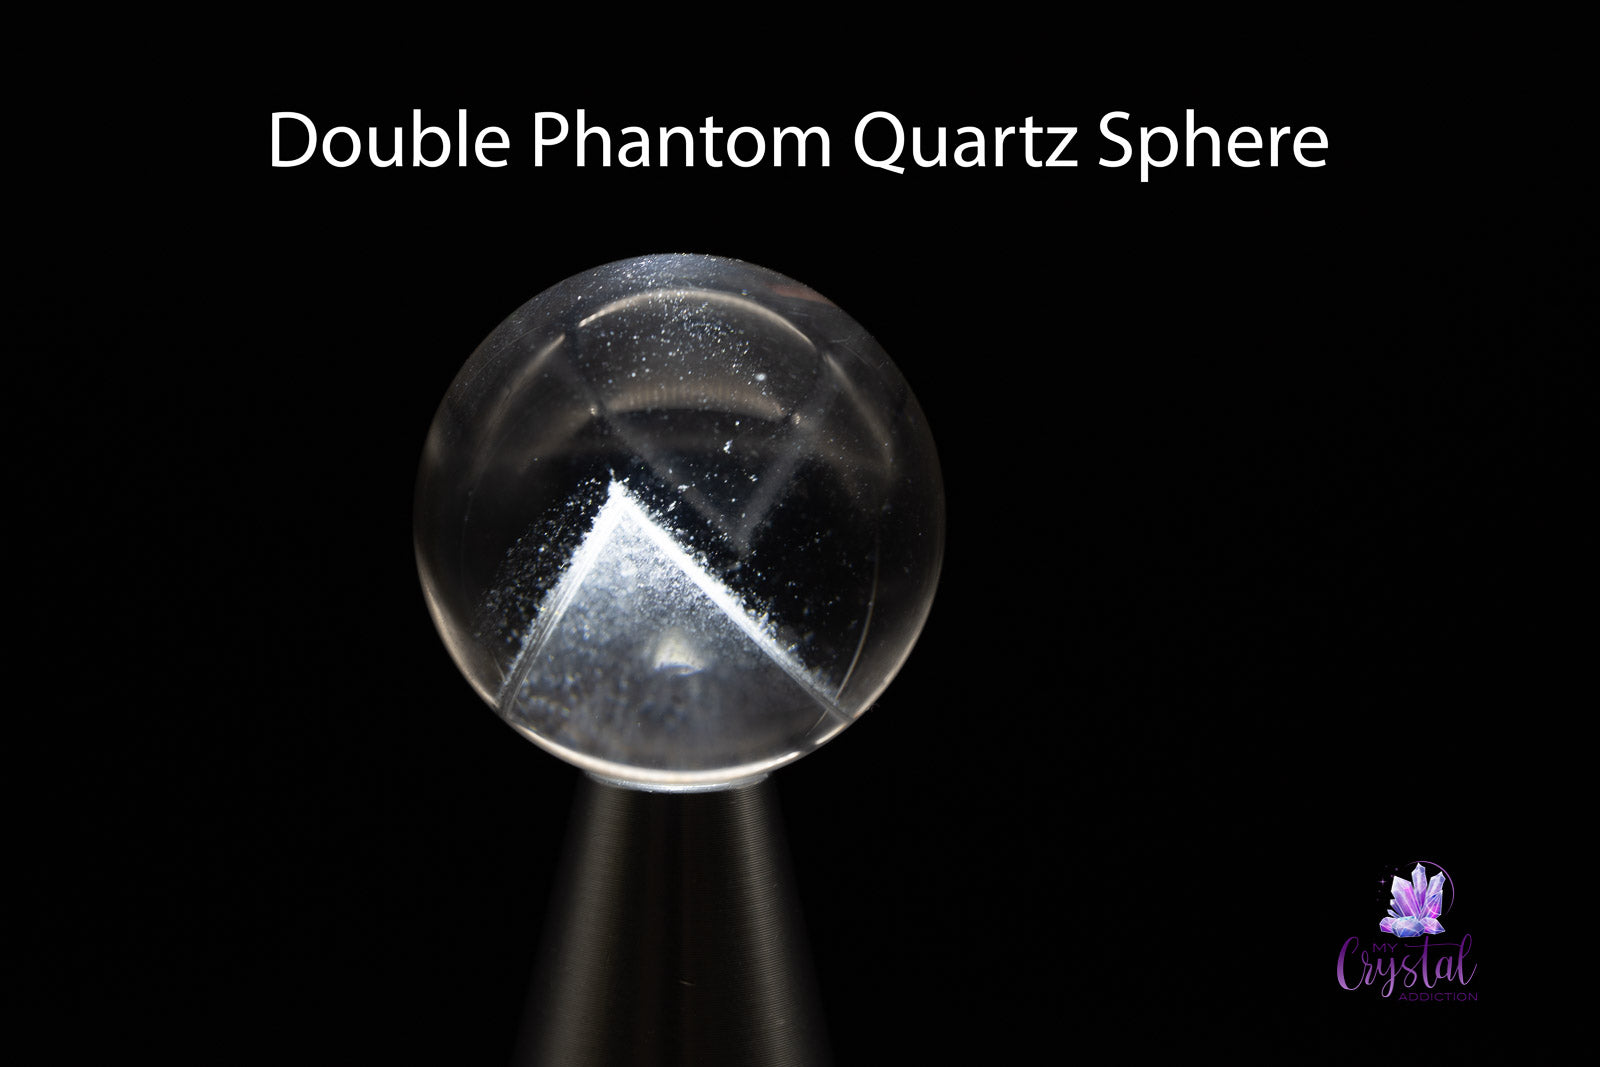 Phantom Quartz Sphere 1.1"/28mm - Double Phantom - My Crystal Addiction